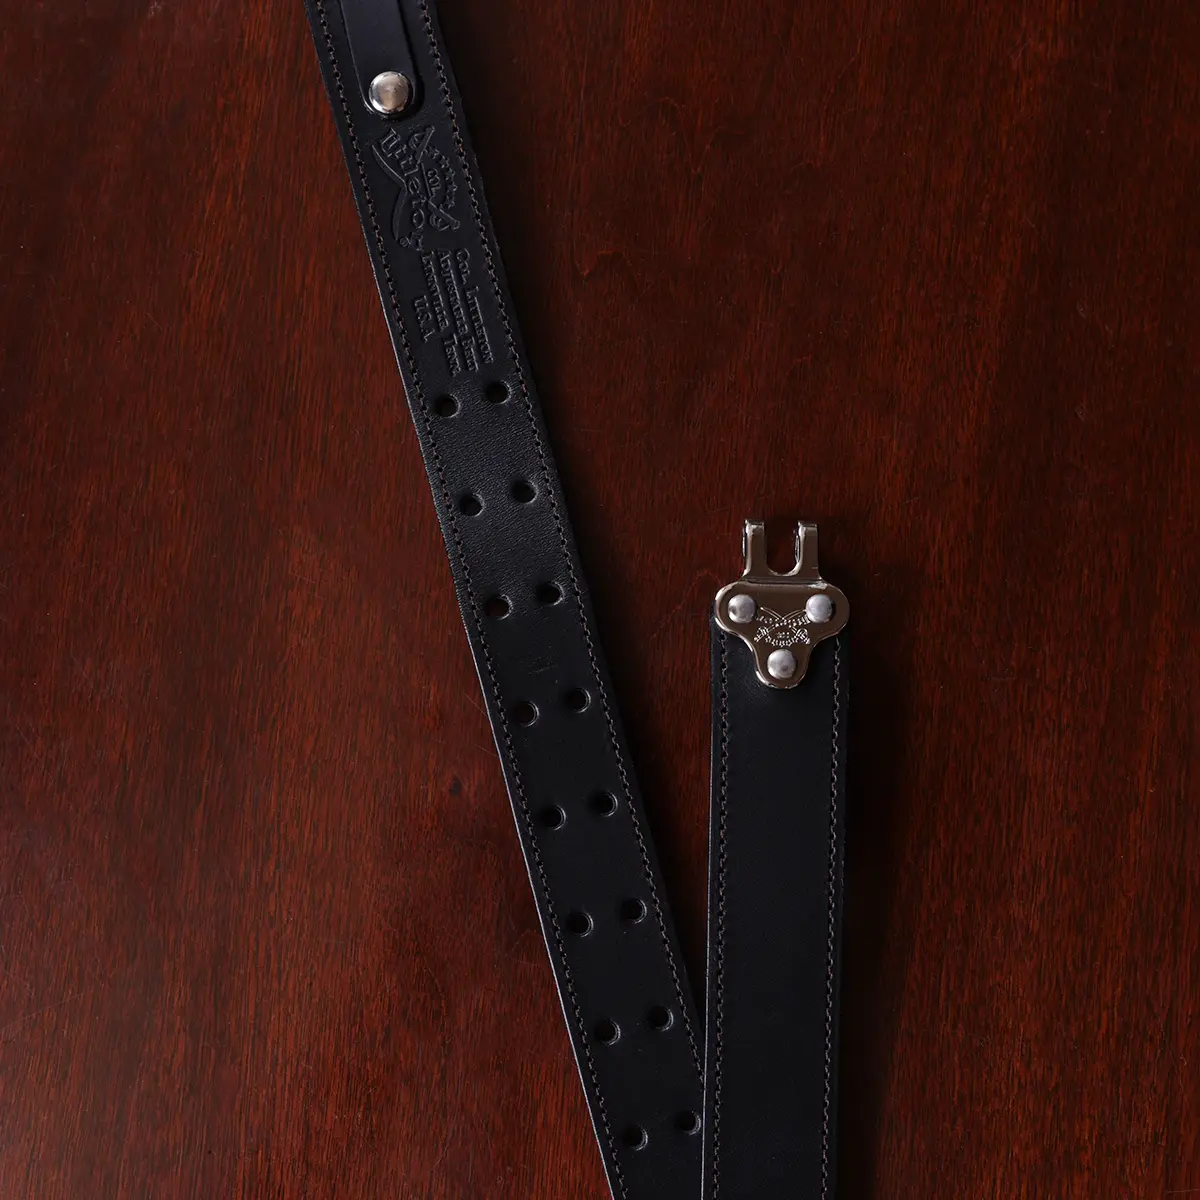 No. 5 Leather Cinch Belt